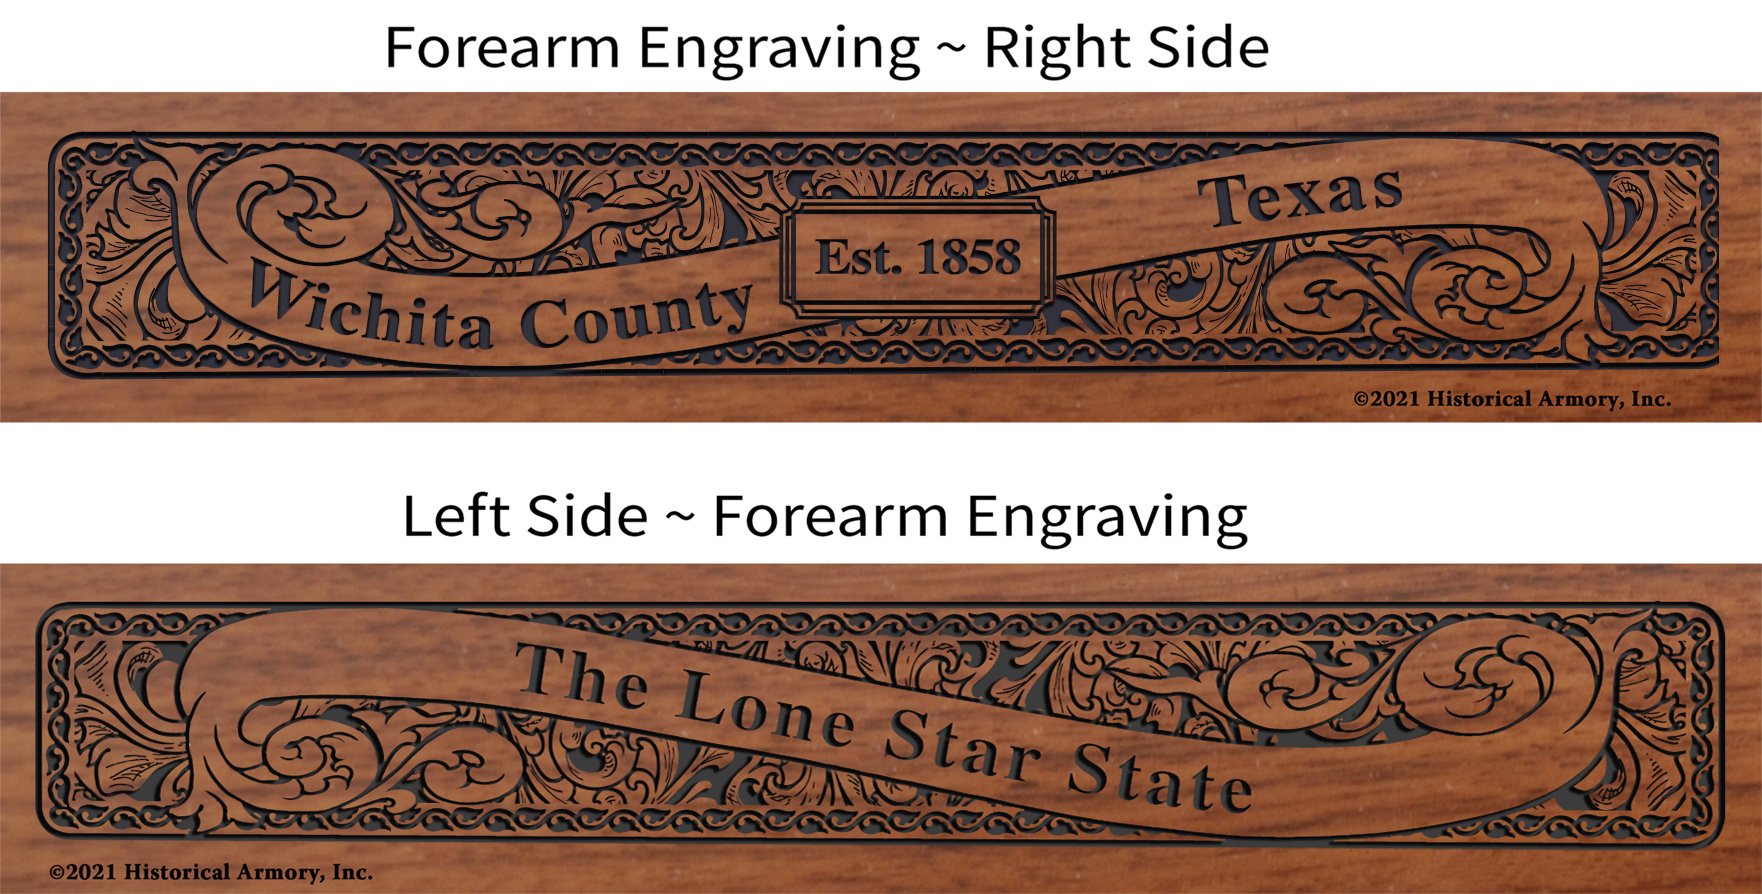 Wichita County Texas Establishment and Motto History Engraved Rifle Forearm